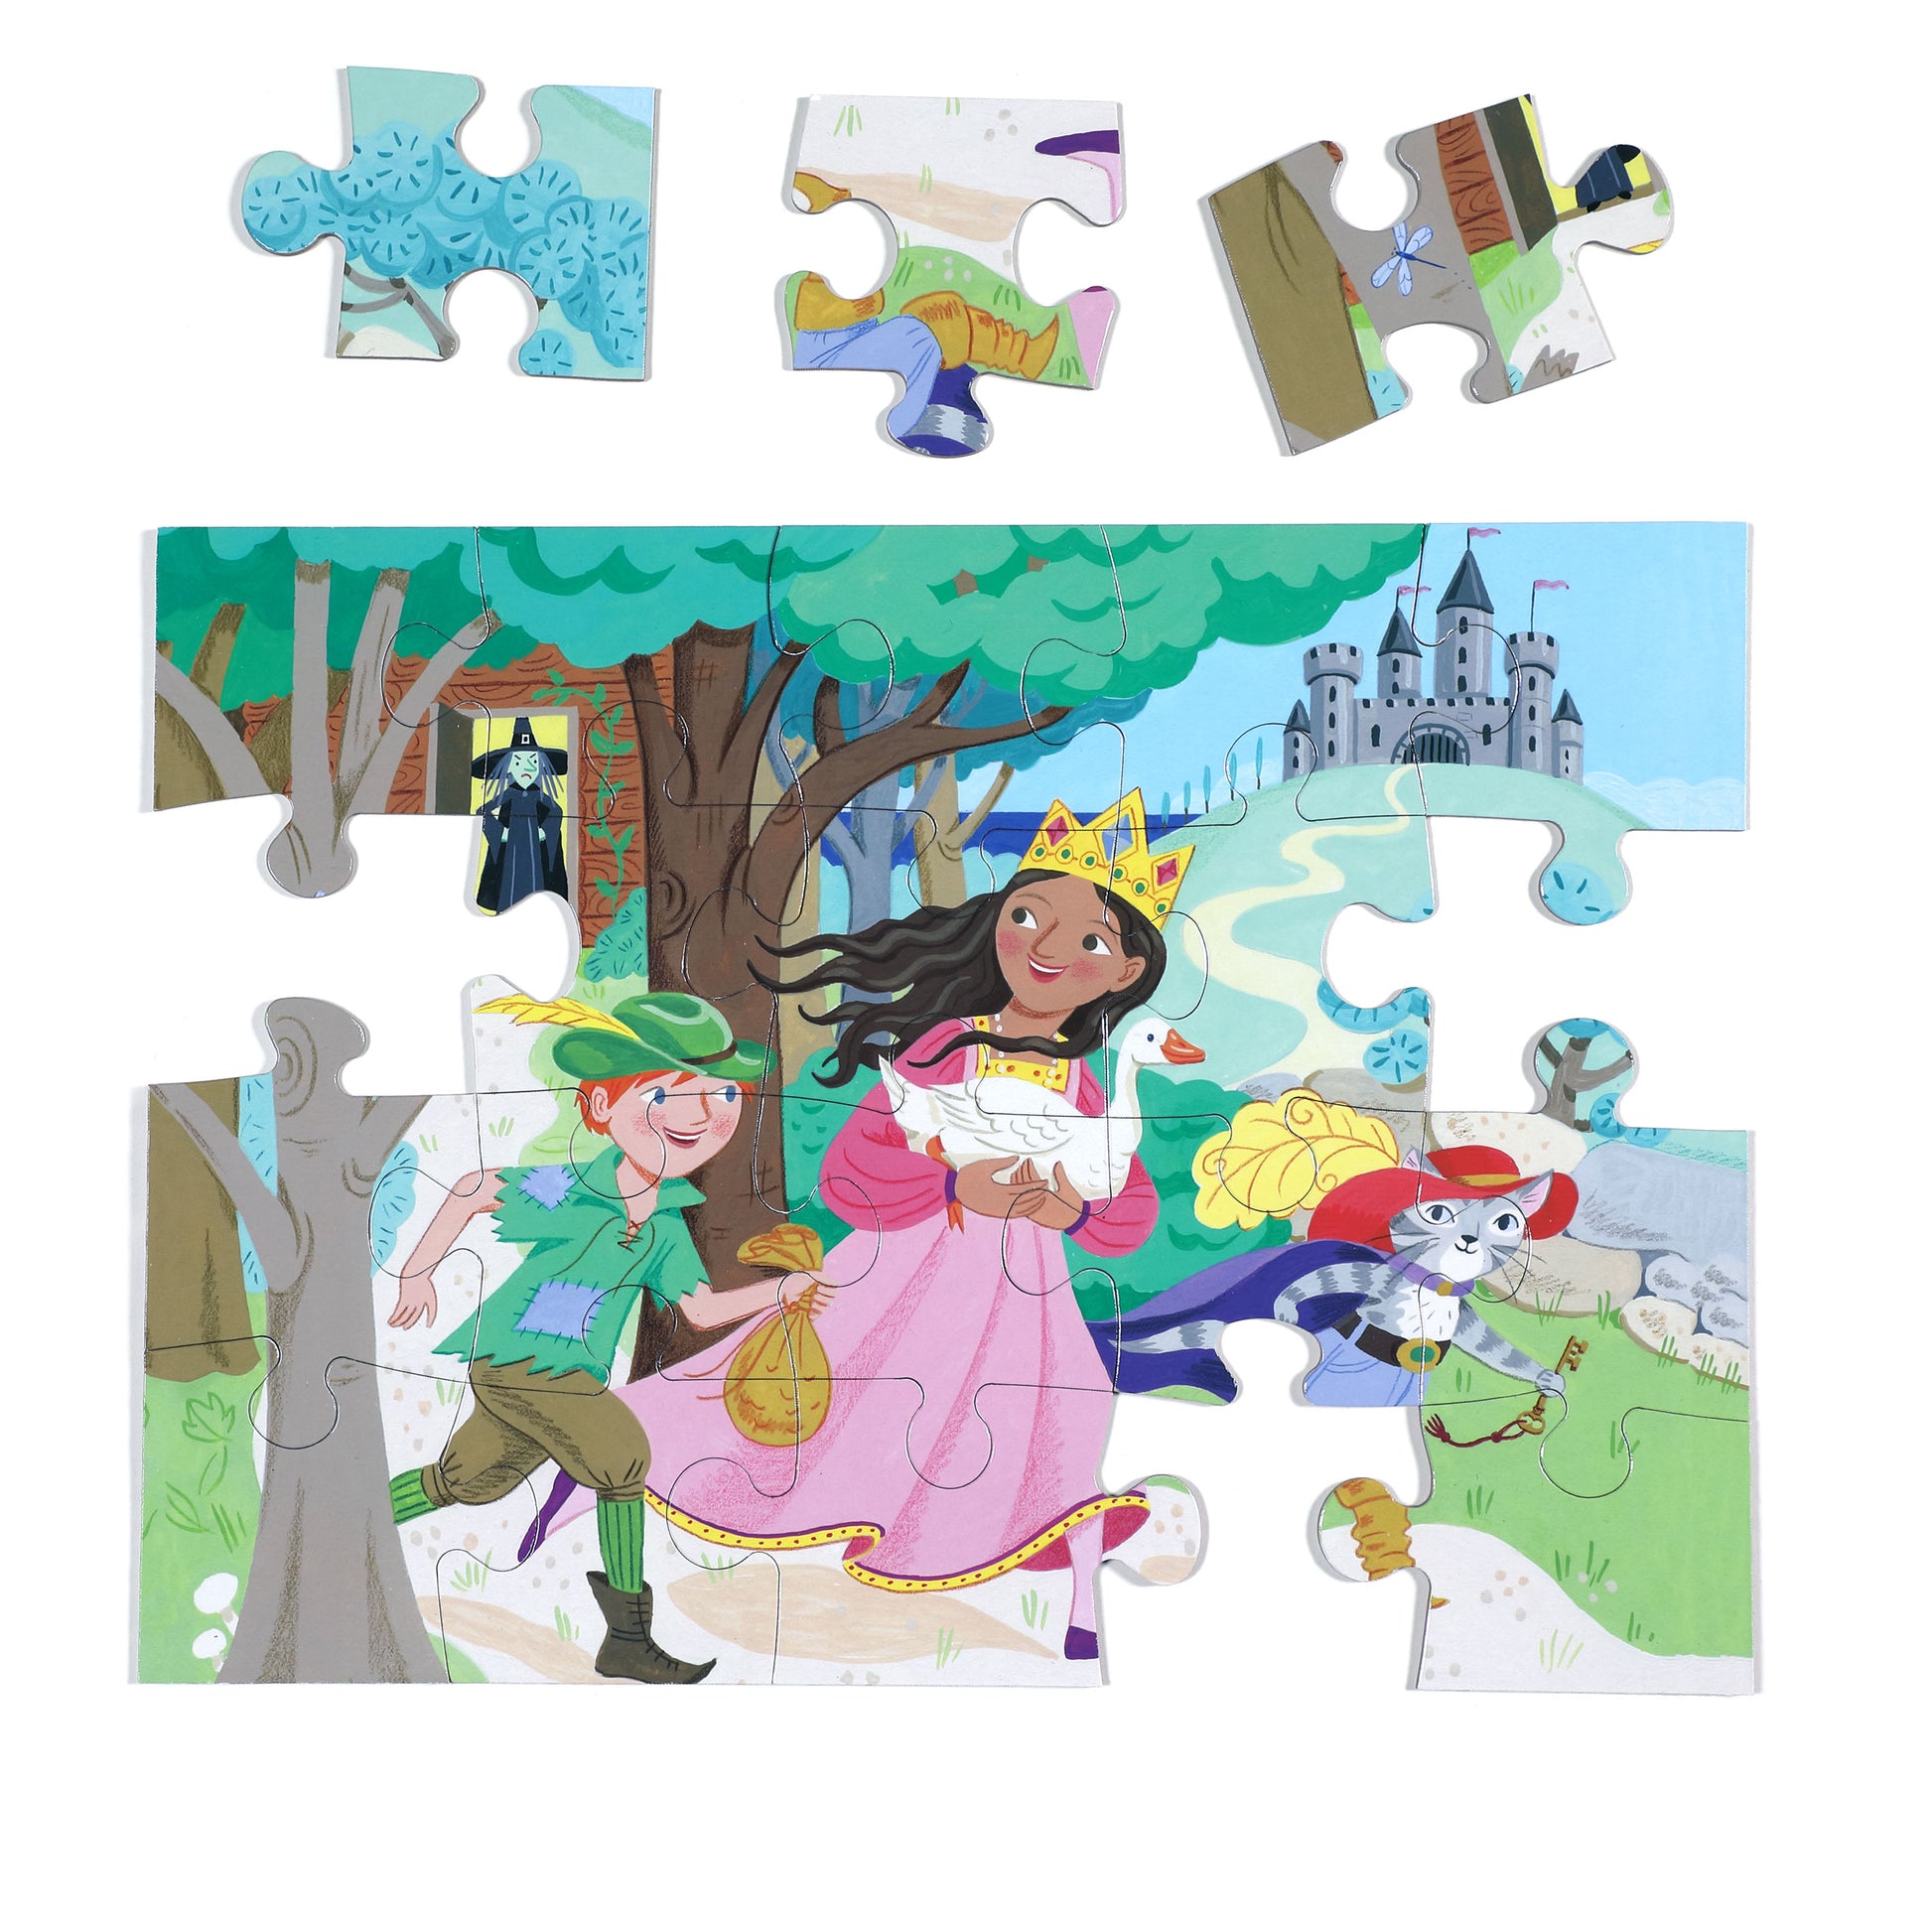 Princess Adventure 20 Piece Big Jigsaw Puzzle eeBoo Gifts for Kids 3+